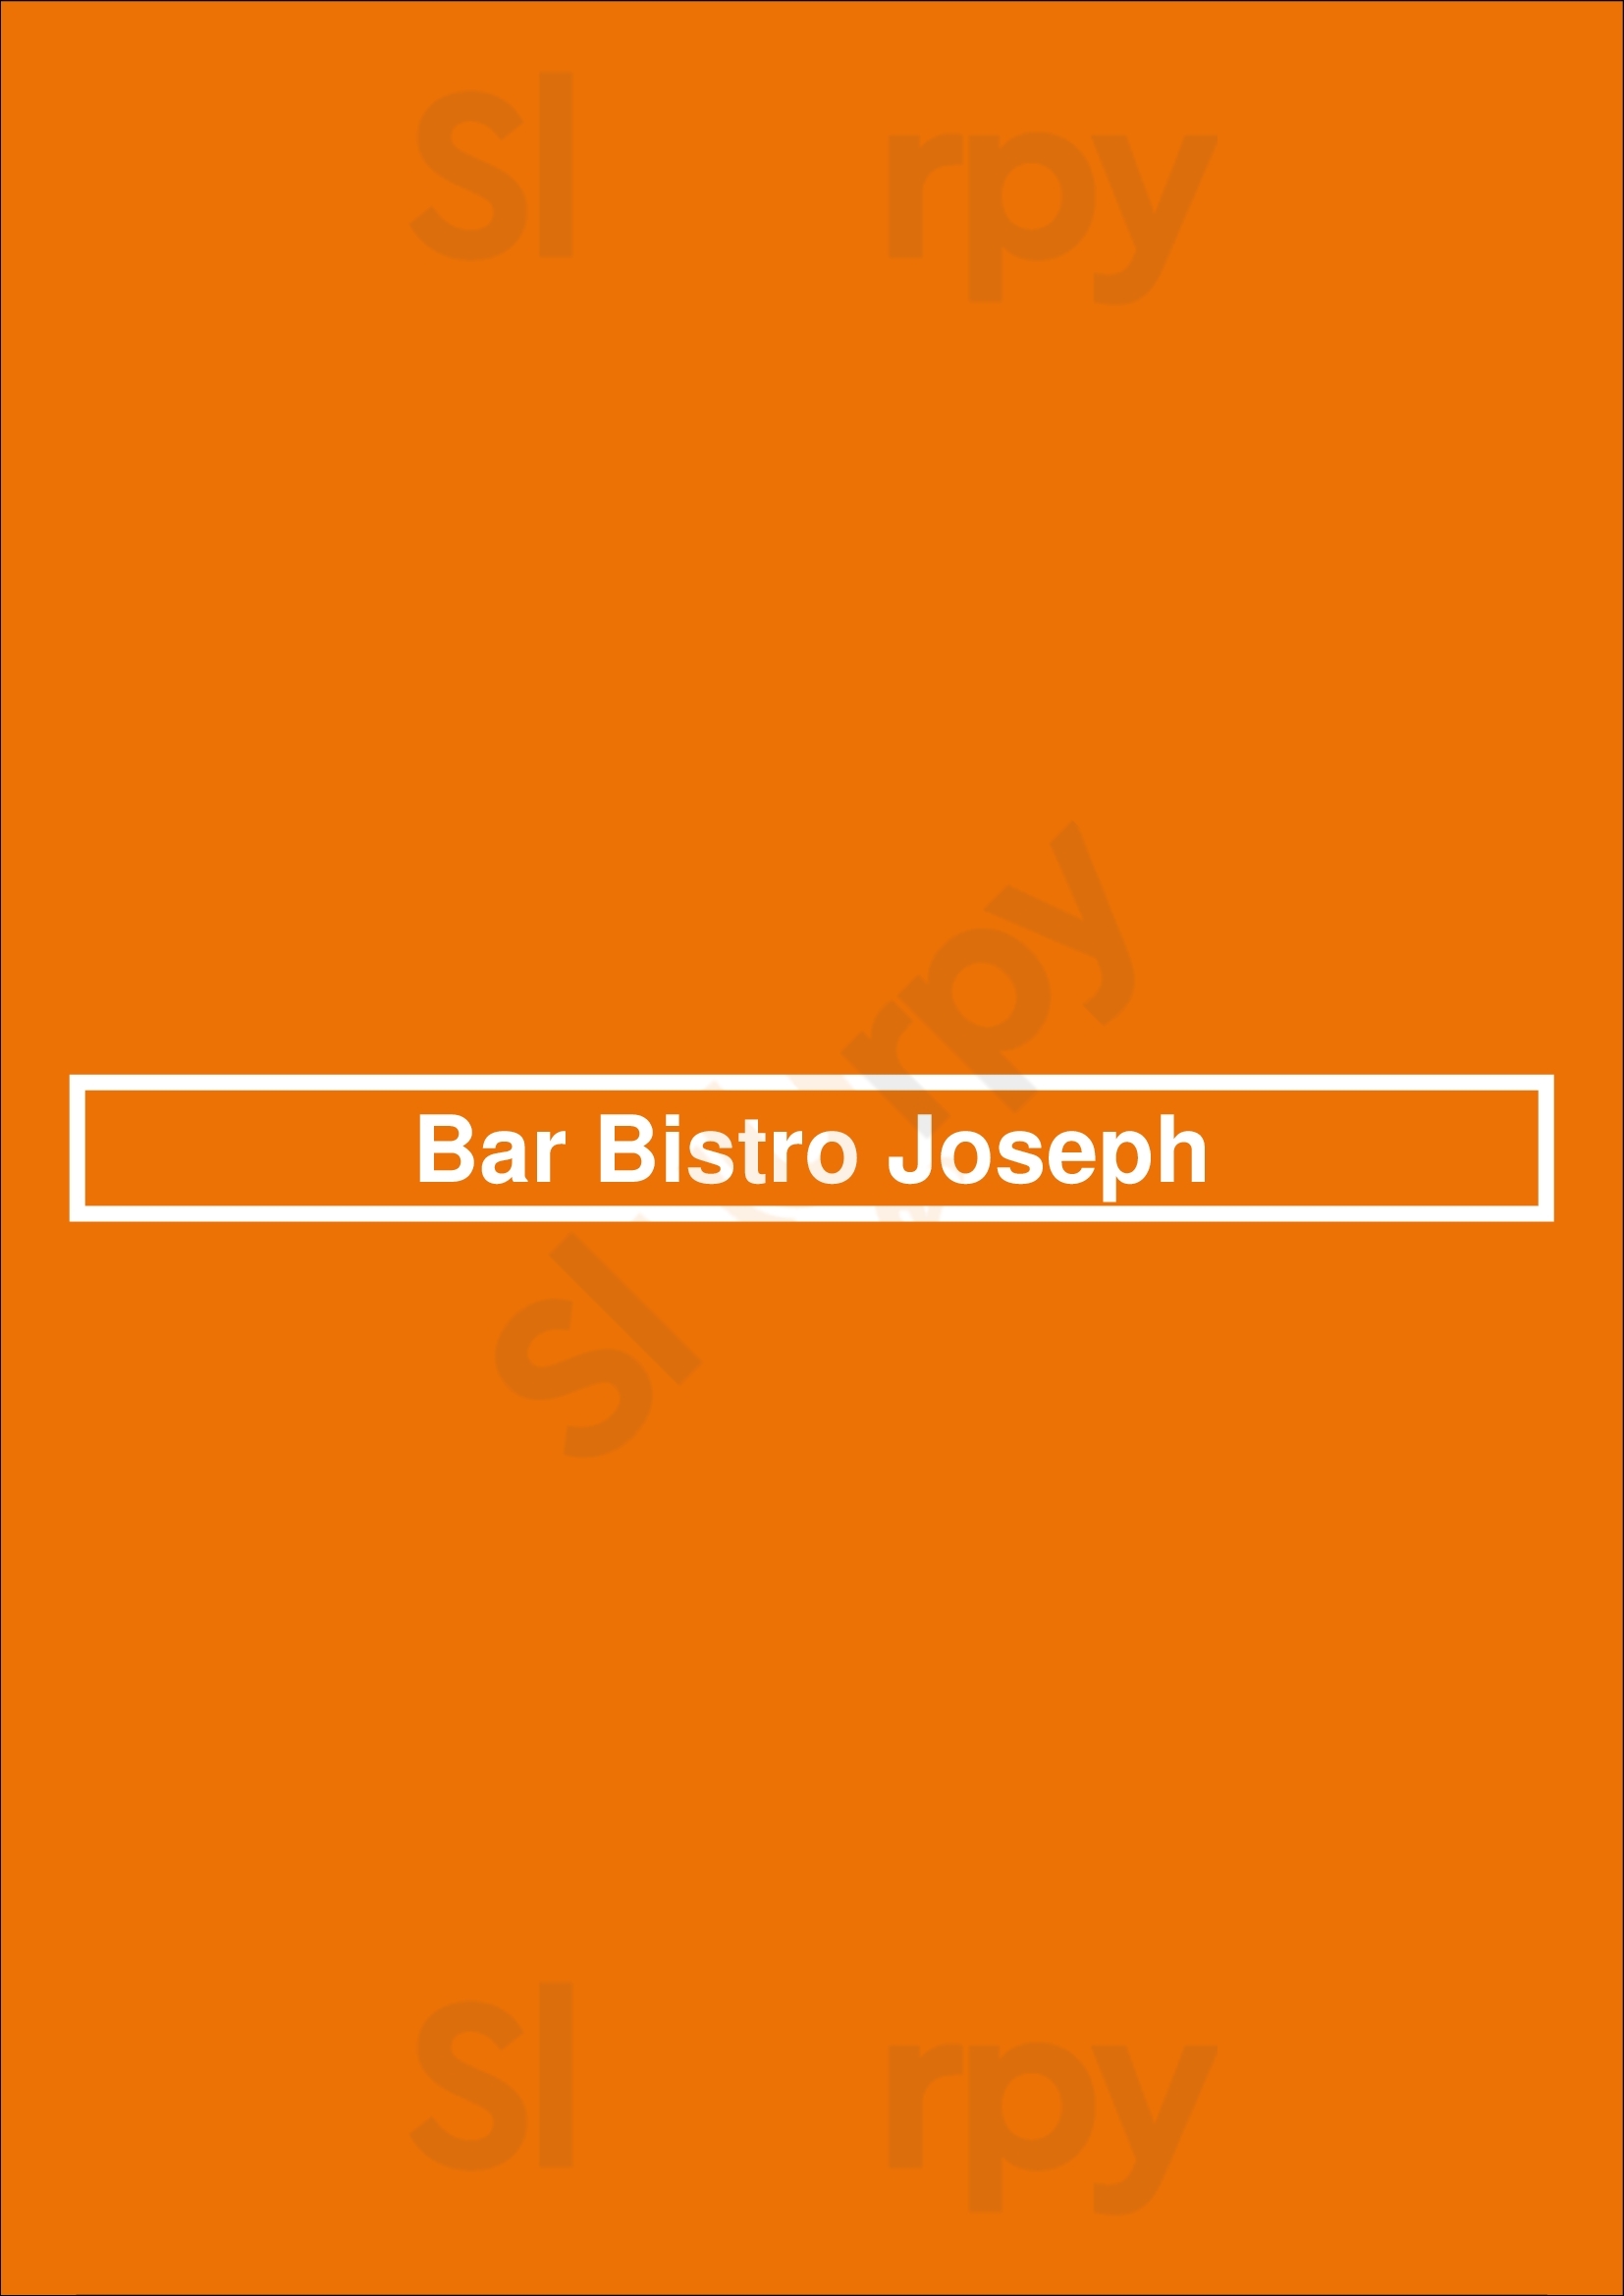 Bar Bistro Joseph Hoofddorp Menu - 1